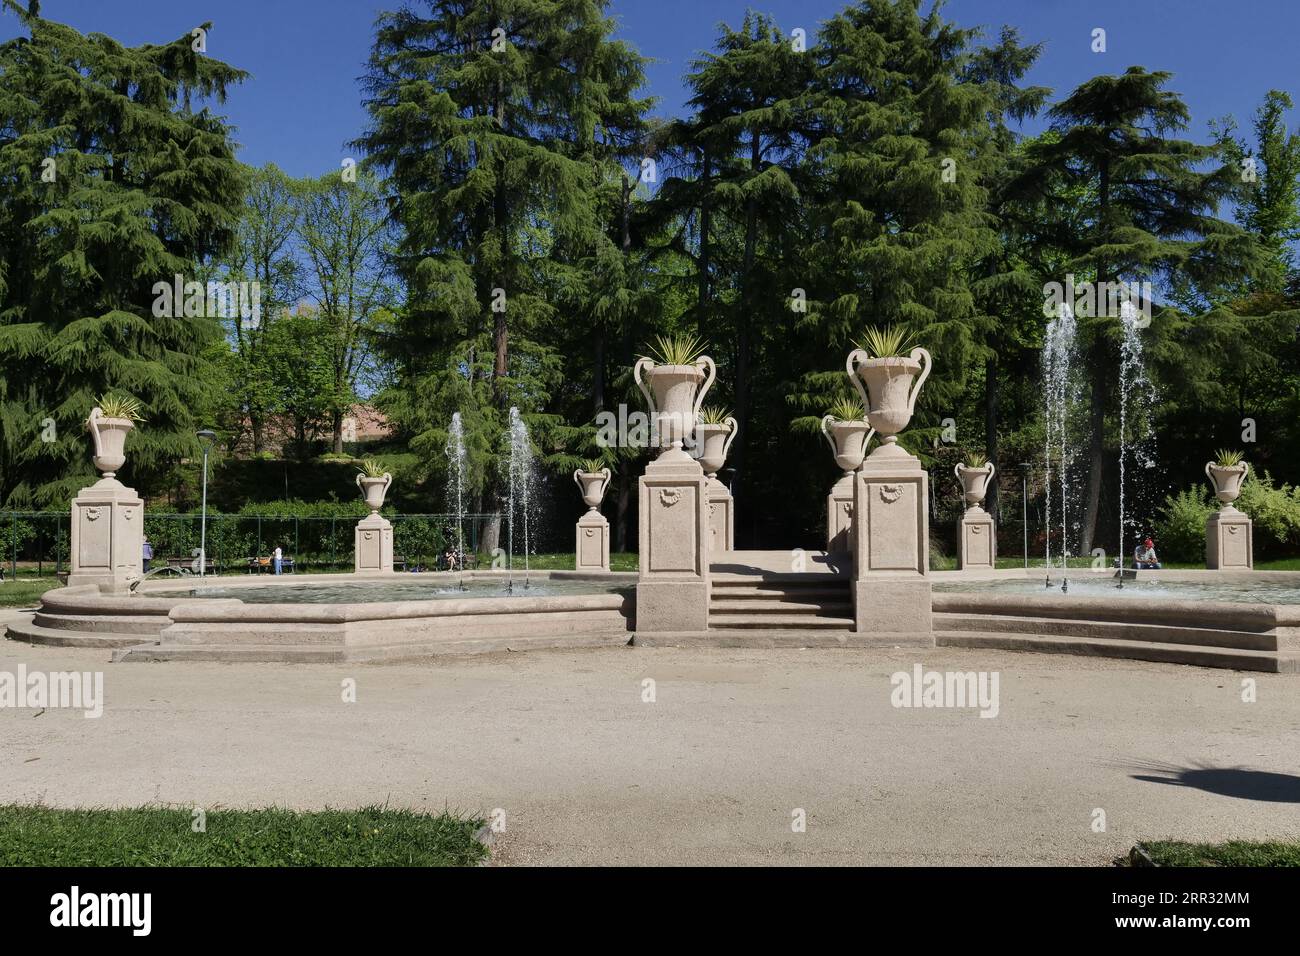 Fountain in Allea park, Novara, Piedmont, Italy Stock Photo